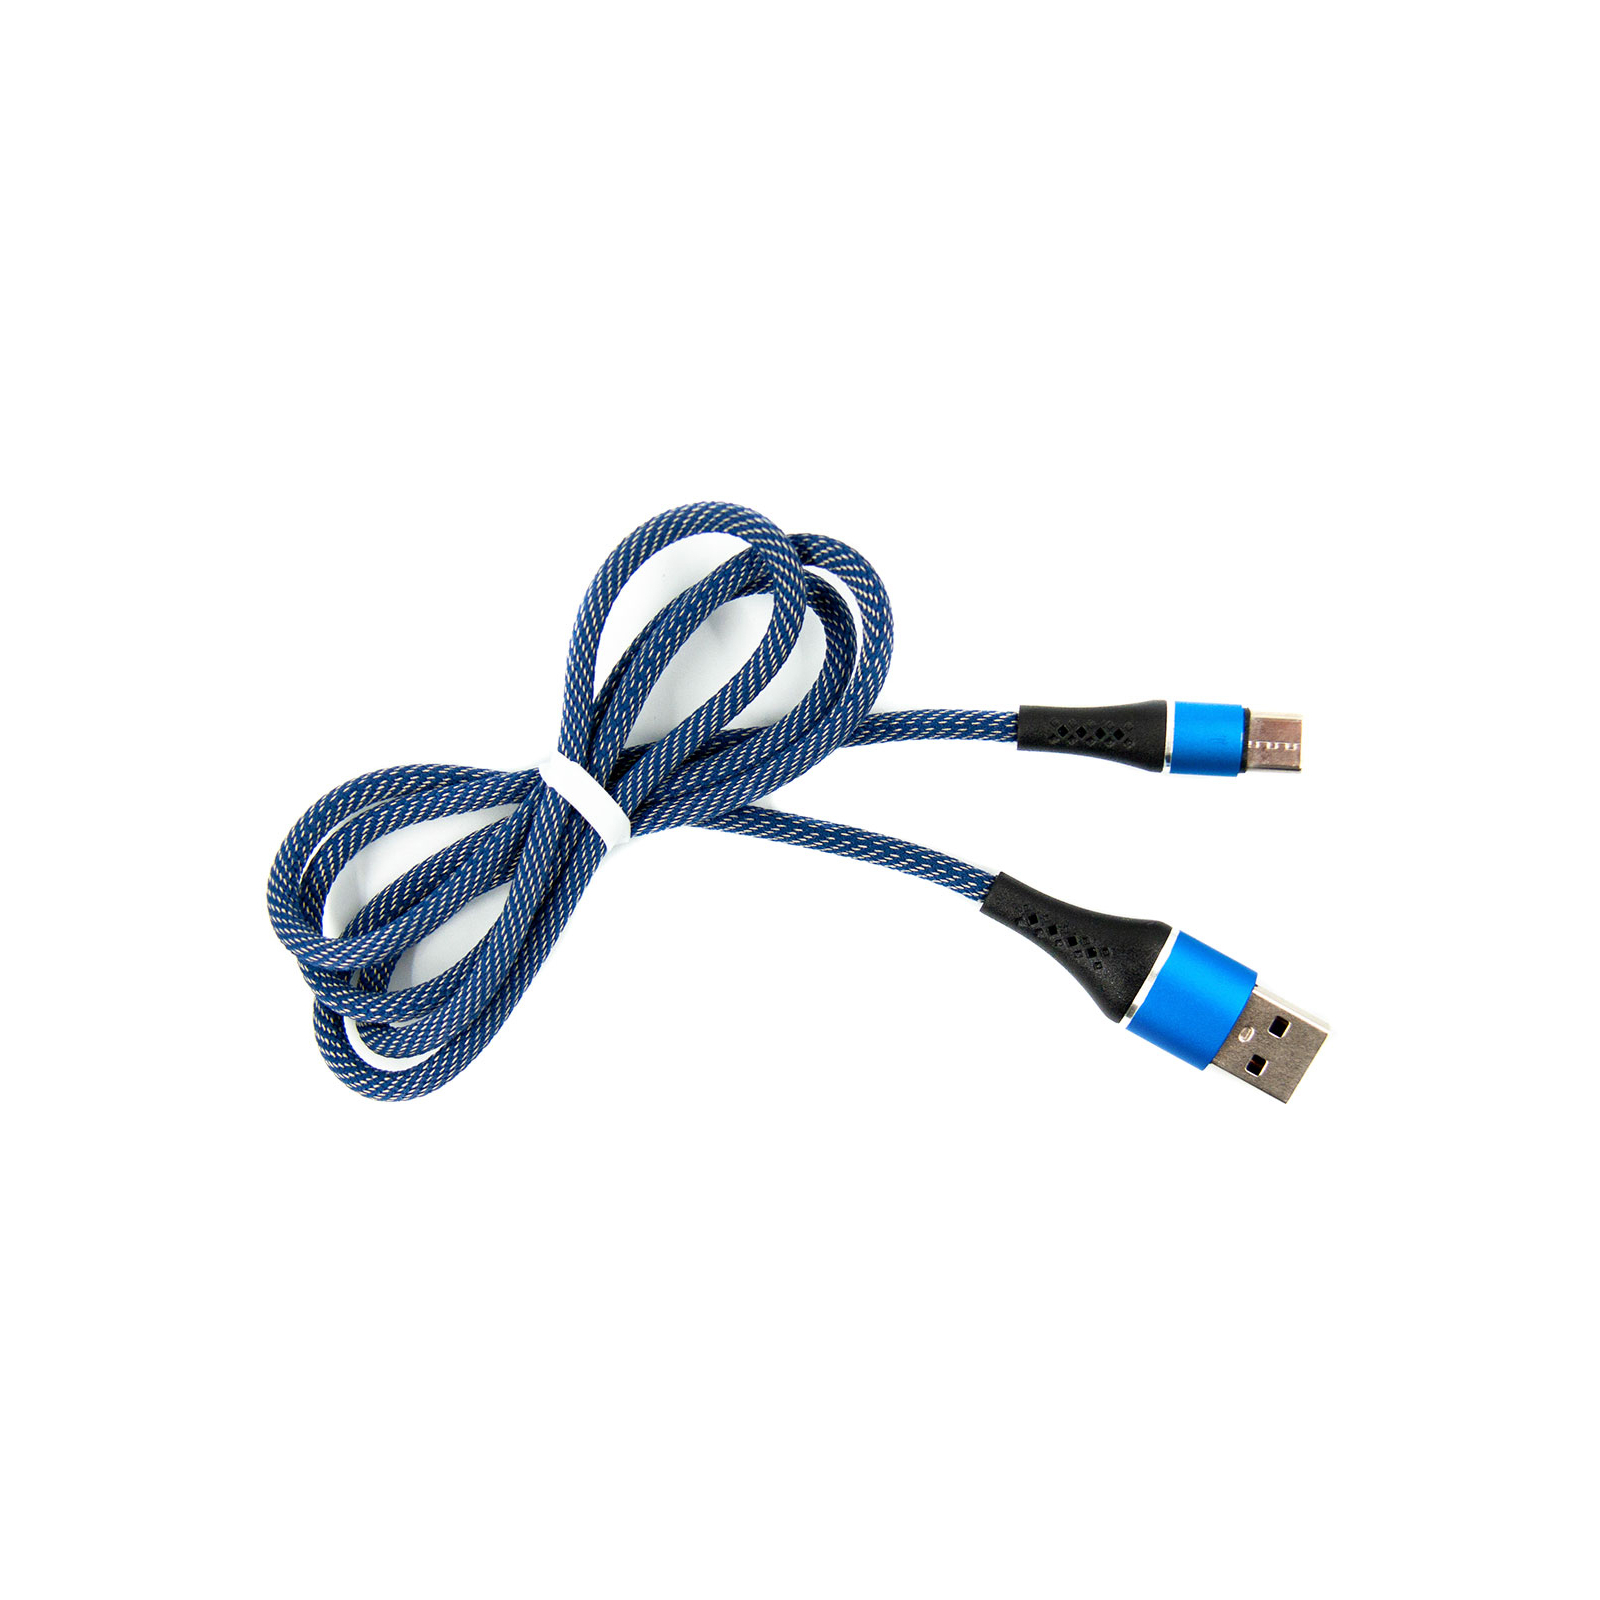 Дата кабель USB 2.0 AM to Type-C 1.0m gray Dengos (NTK-TC-MT-GREY) зображення 2